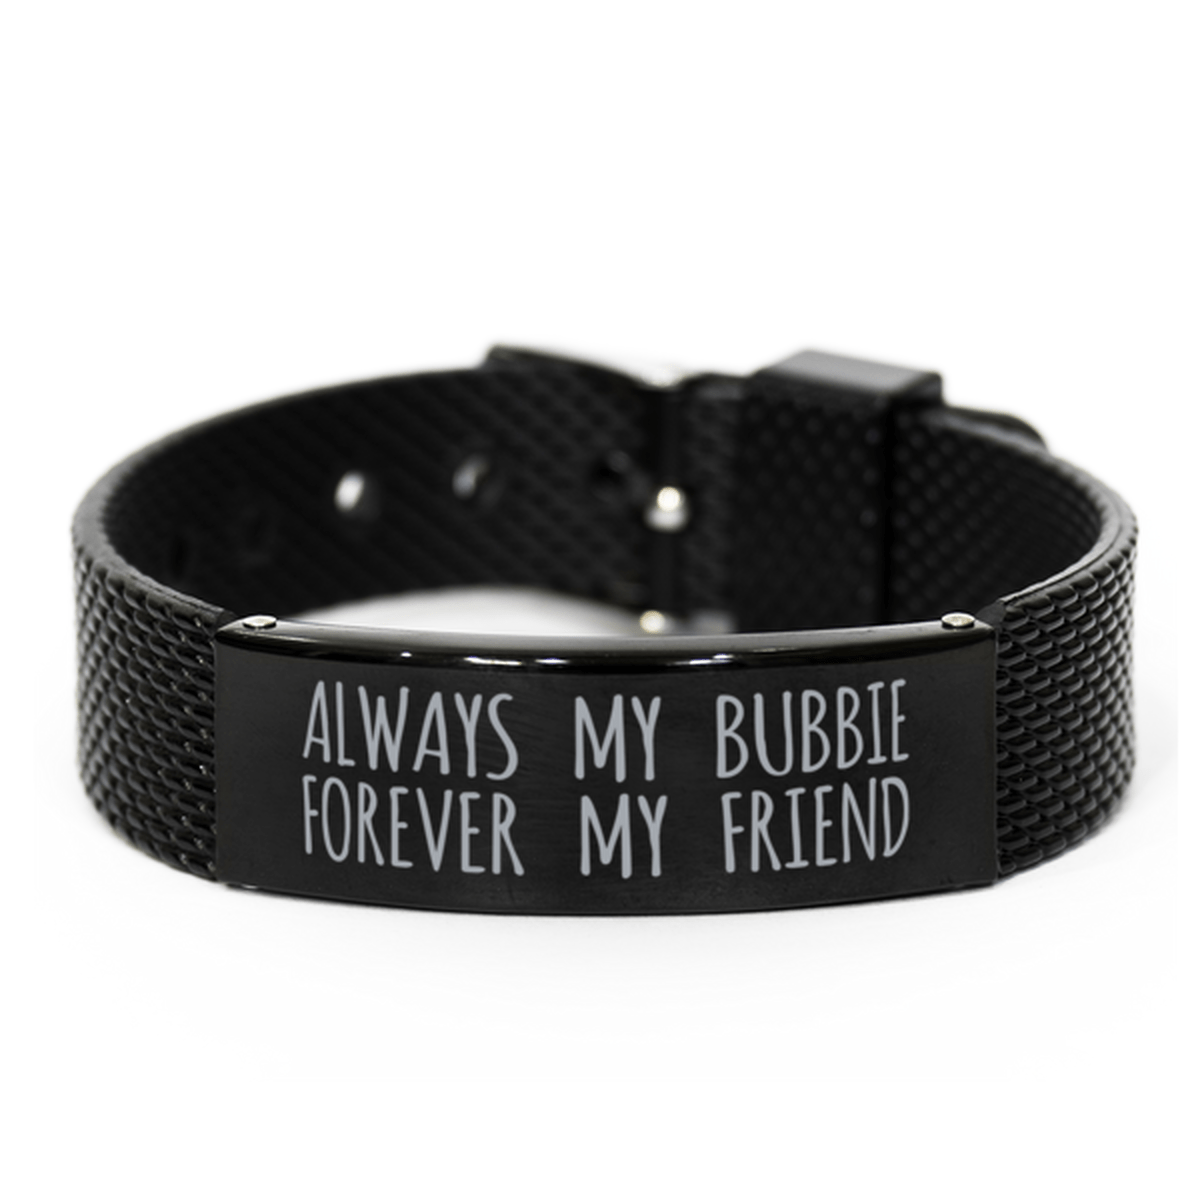 Inspirational Bubbie Black Shark Mesh Bracelet, Always My Bubbie Forever My Friend, Best Birthday Gifts for Family Friends